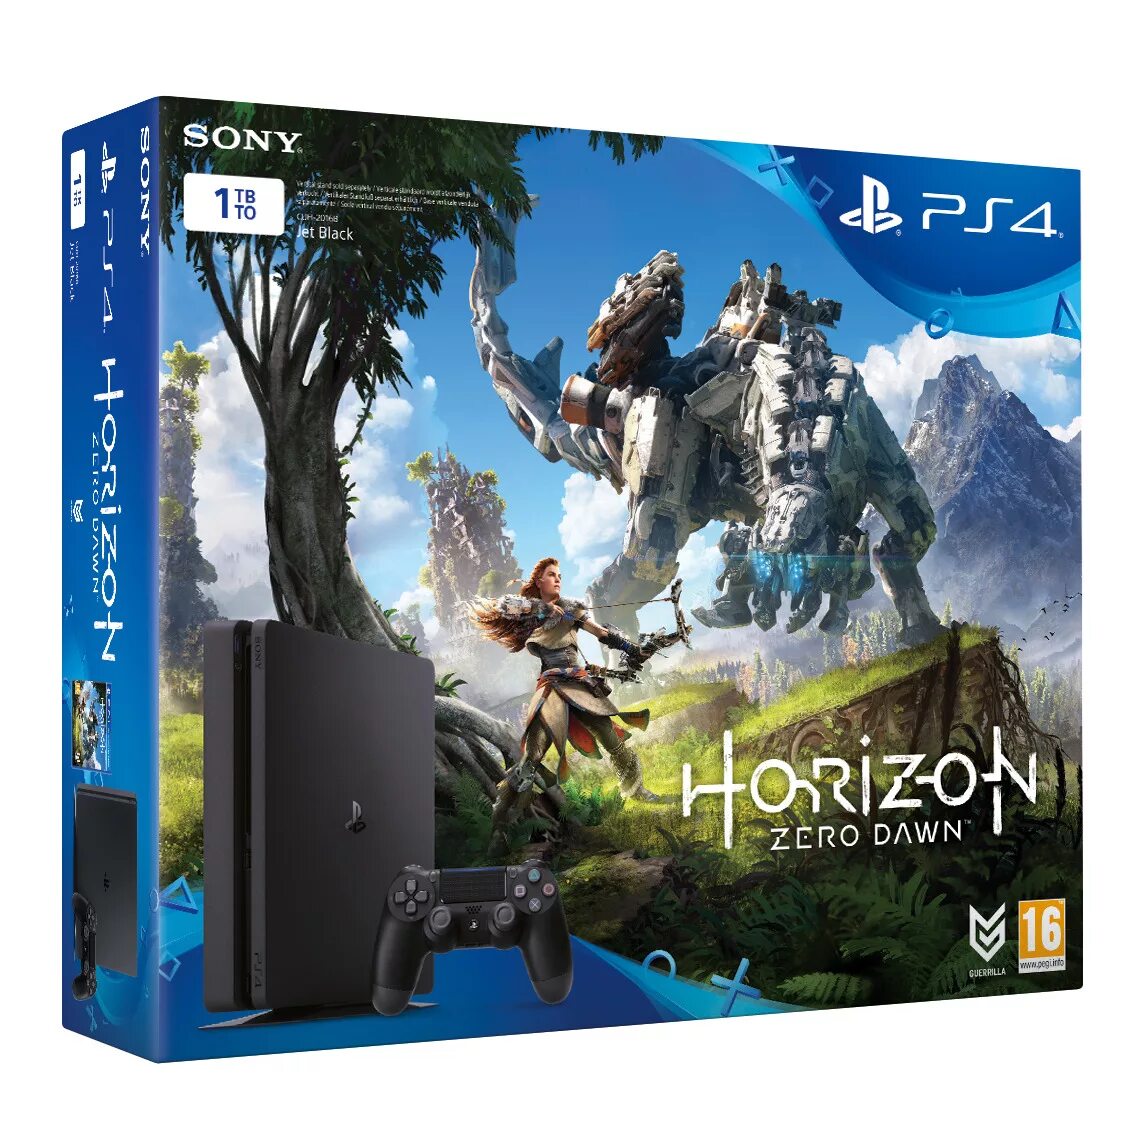 Sony PLAYSTATION 4 Horizon Zero. Sony PLAYSTATION 4 Slim Horizon. Горизонт игра на плейстейшен 4. Sony PLAYSTATION 4 Horizon Zero Dawn. Playstation bundle